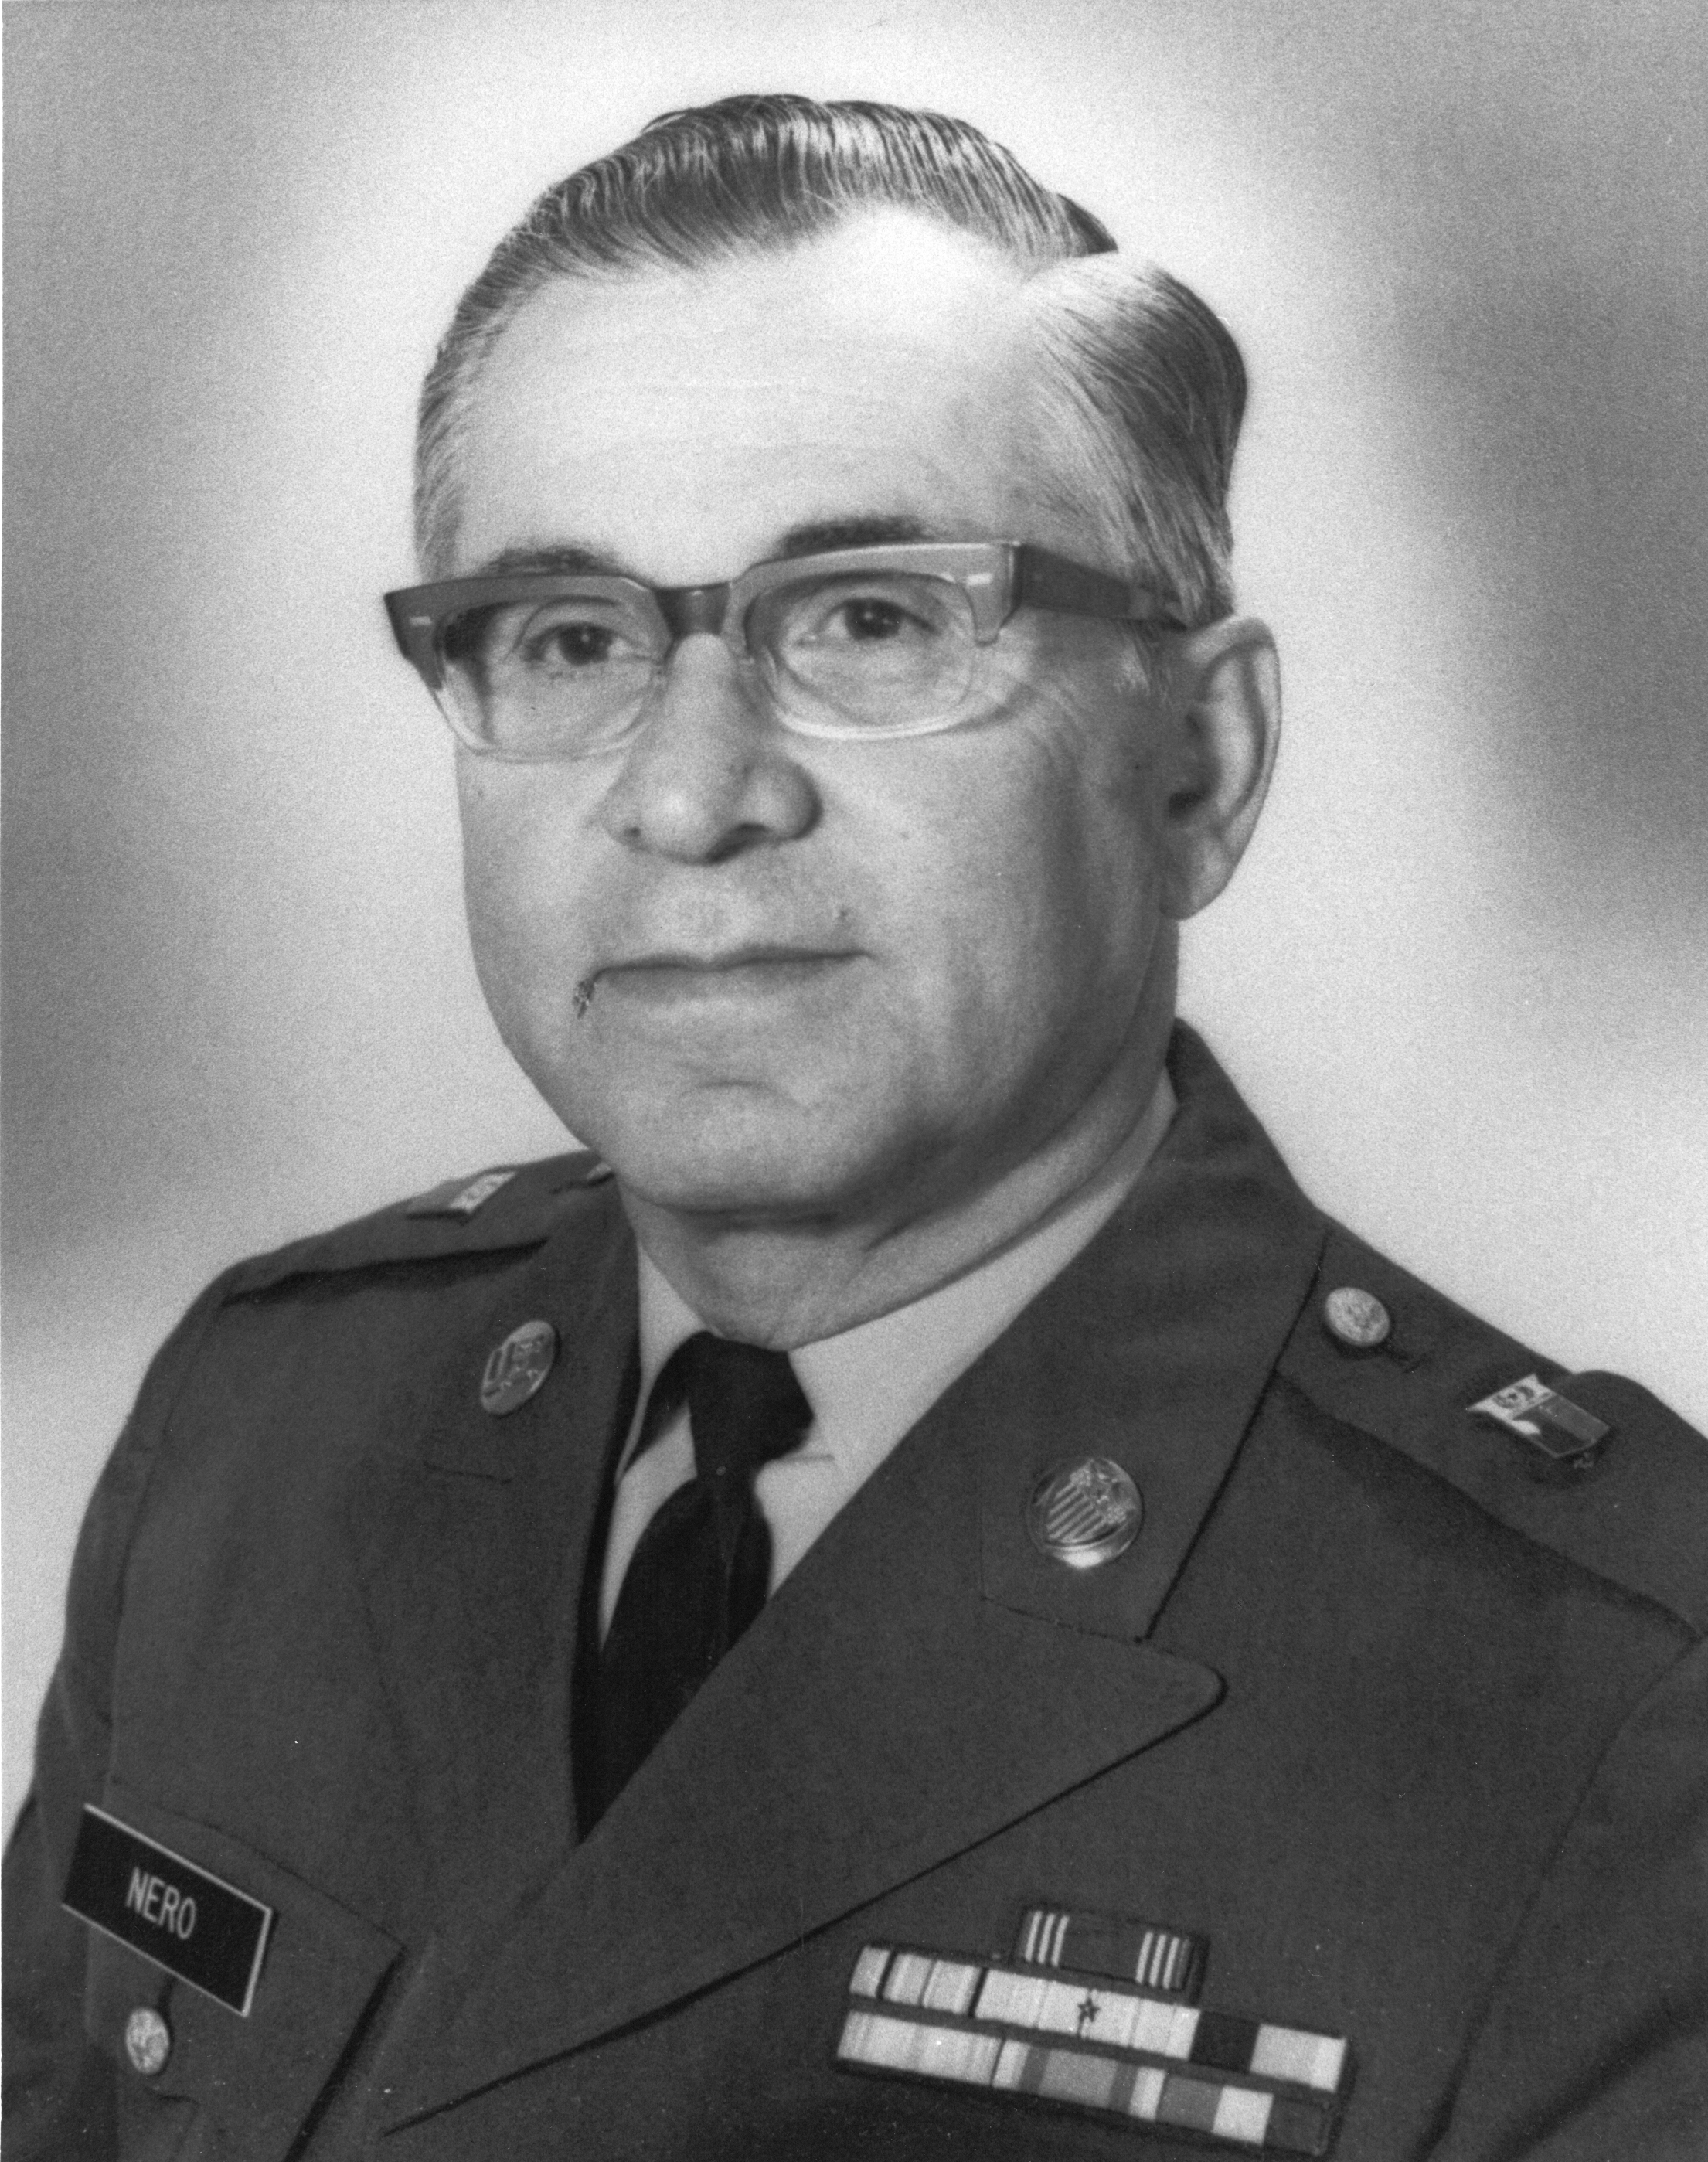 Command Sergeant Major Ernest R. Nero